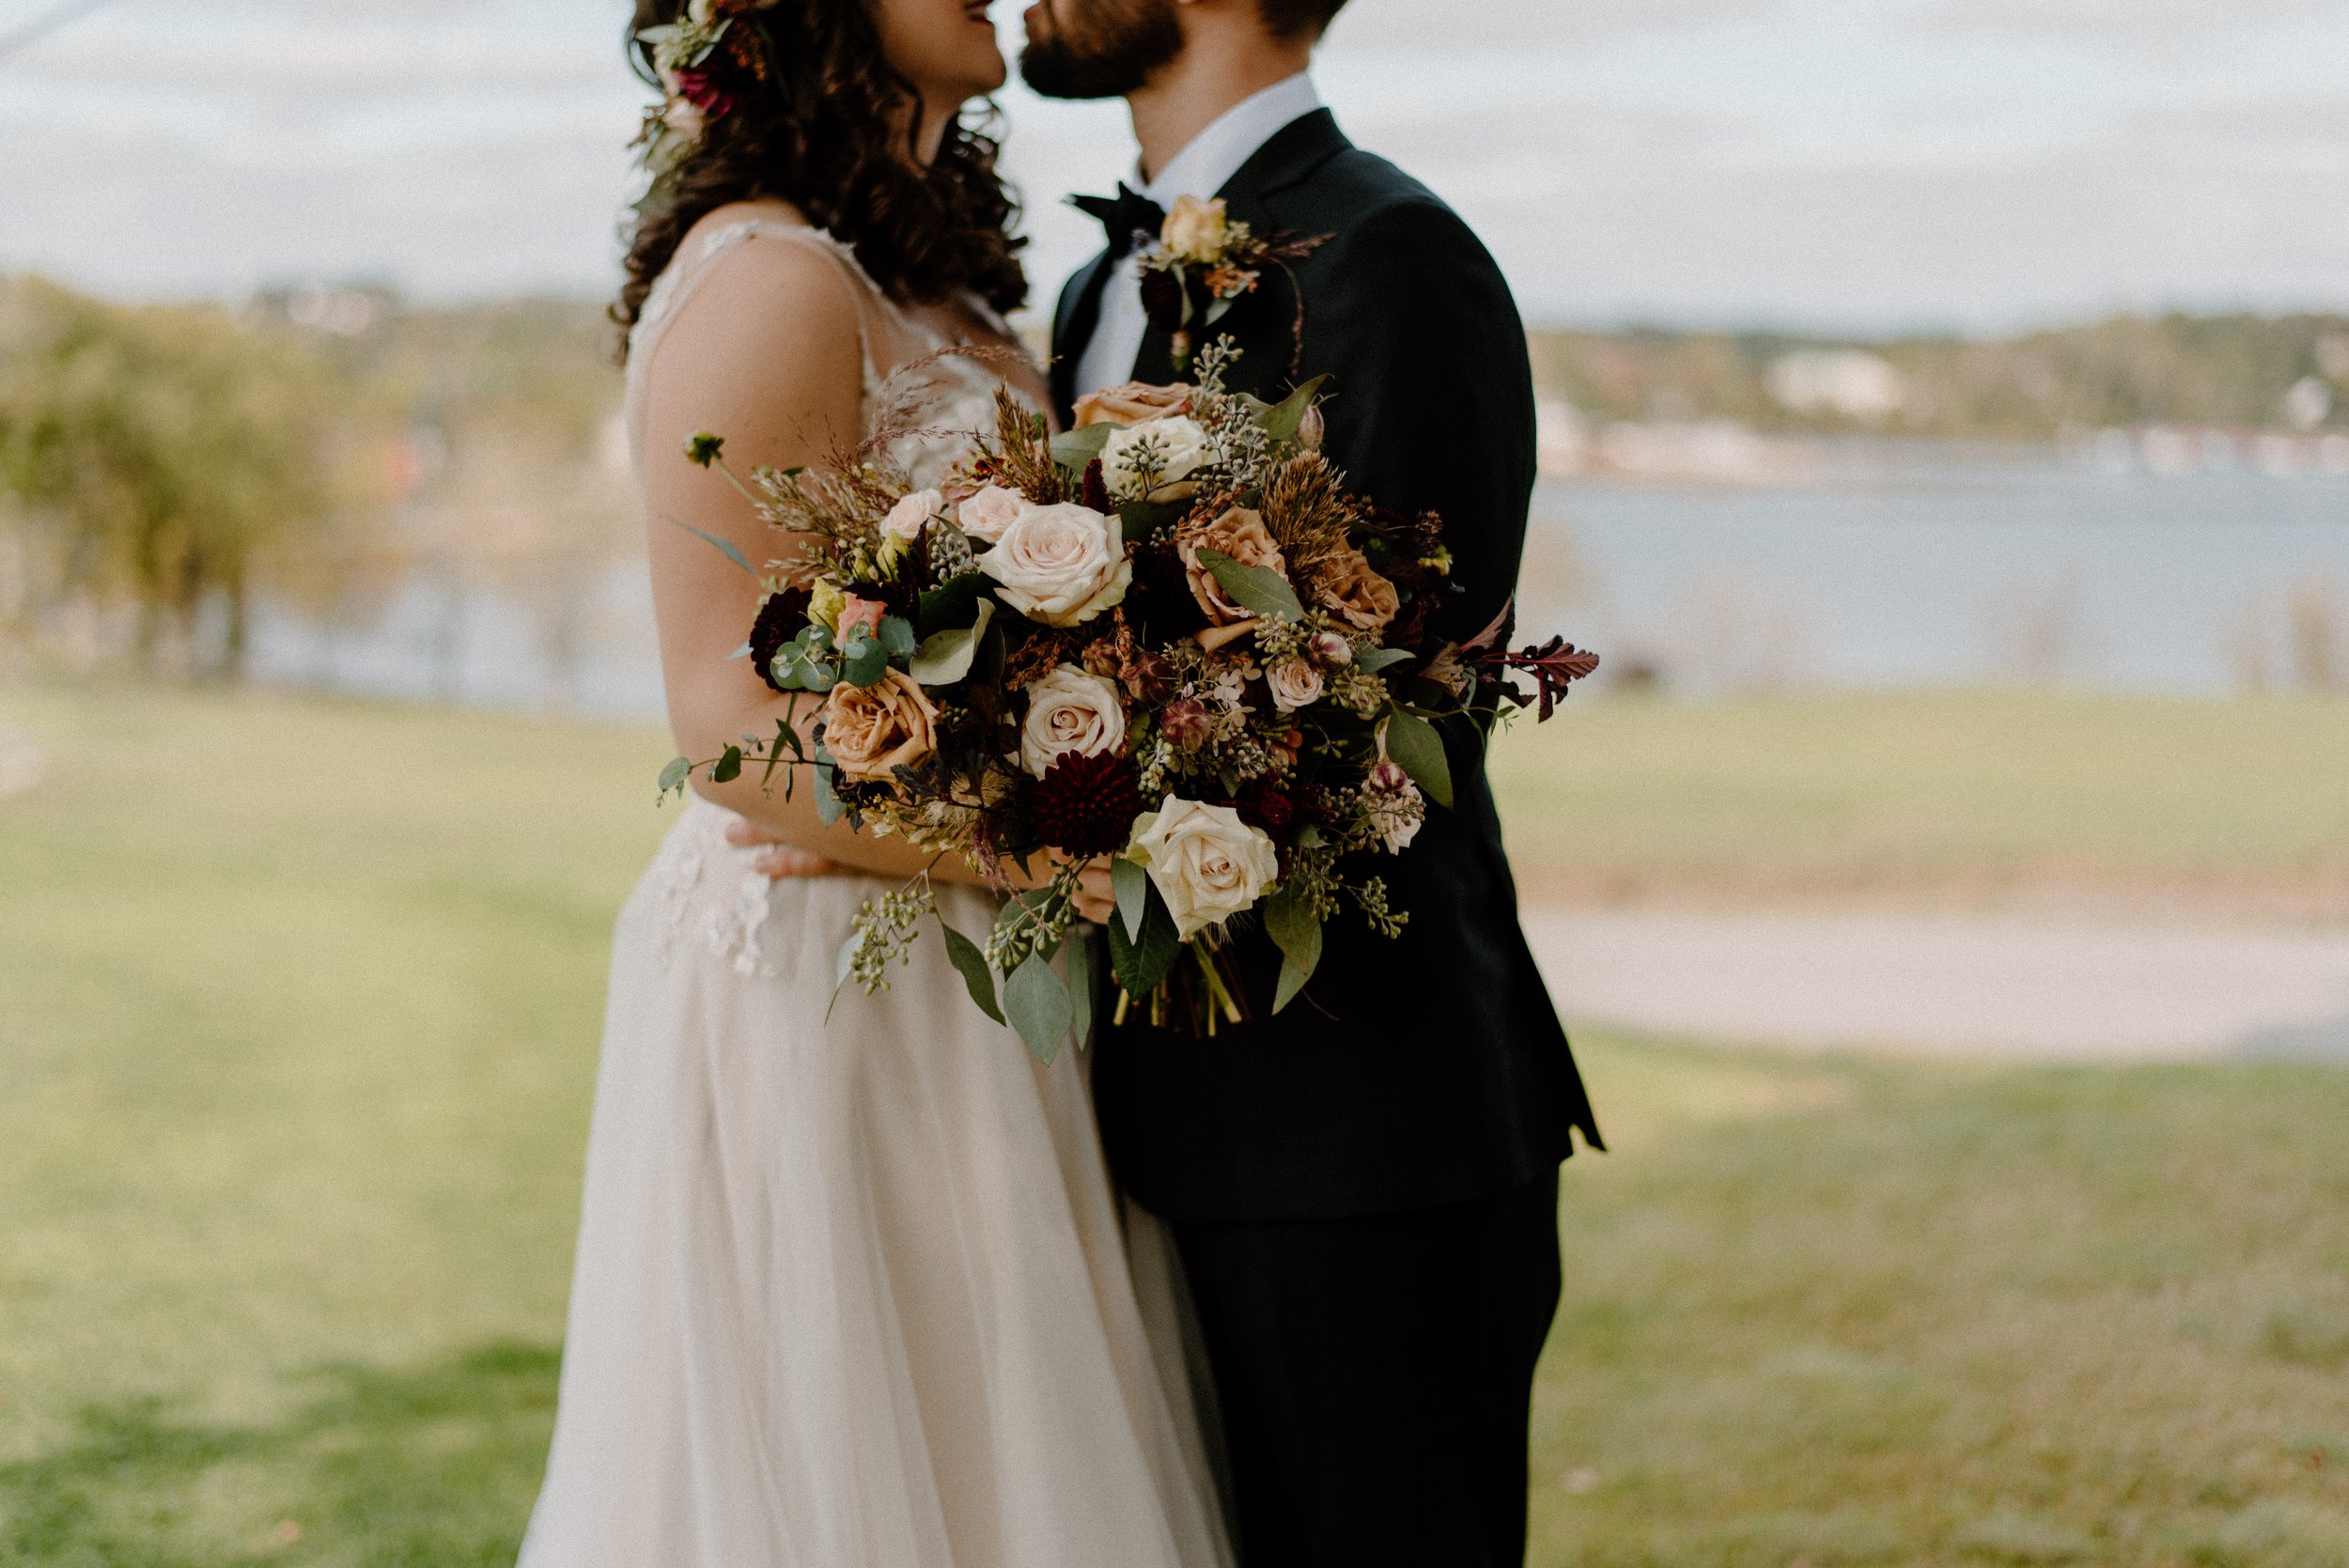 Nova Scotia Lunenburg wedding photographer - Michaela Bell Photography